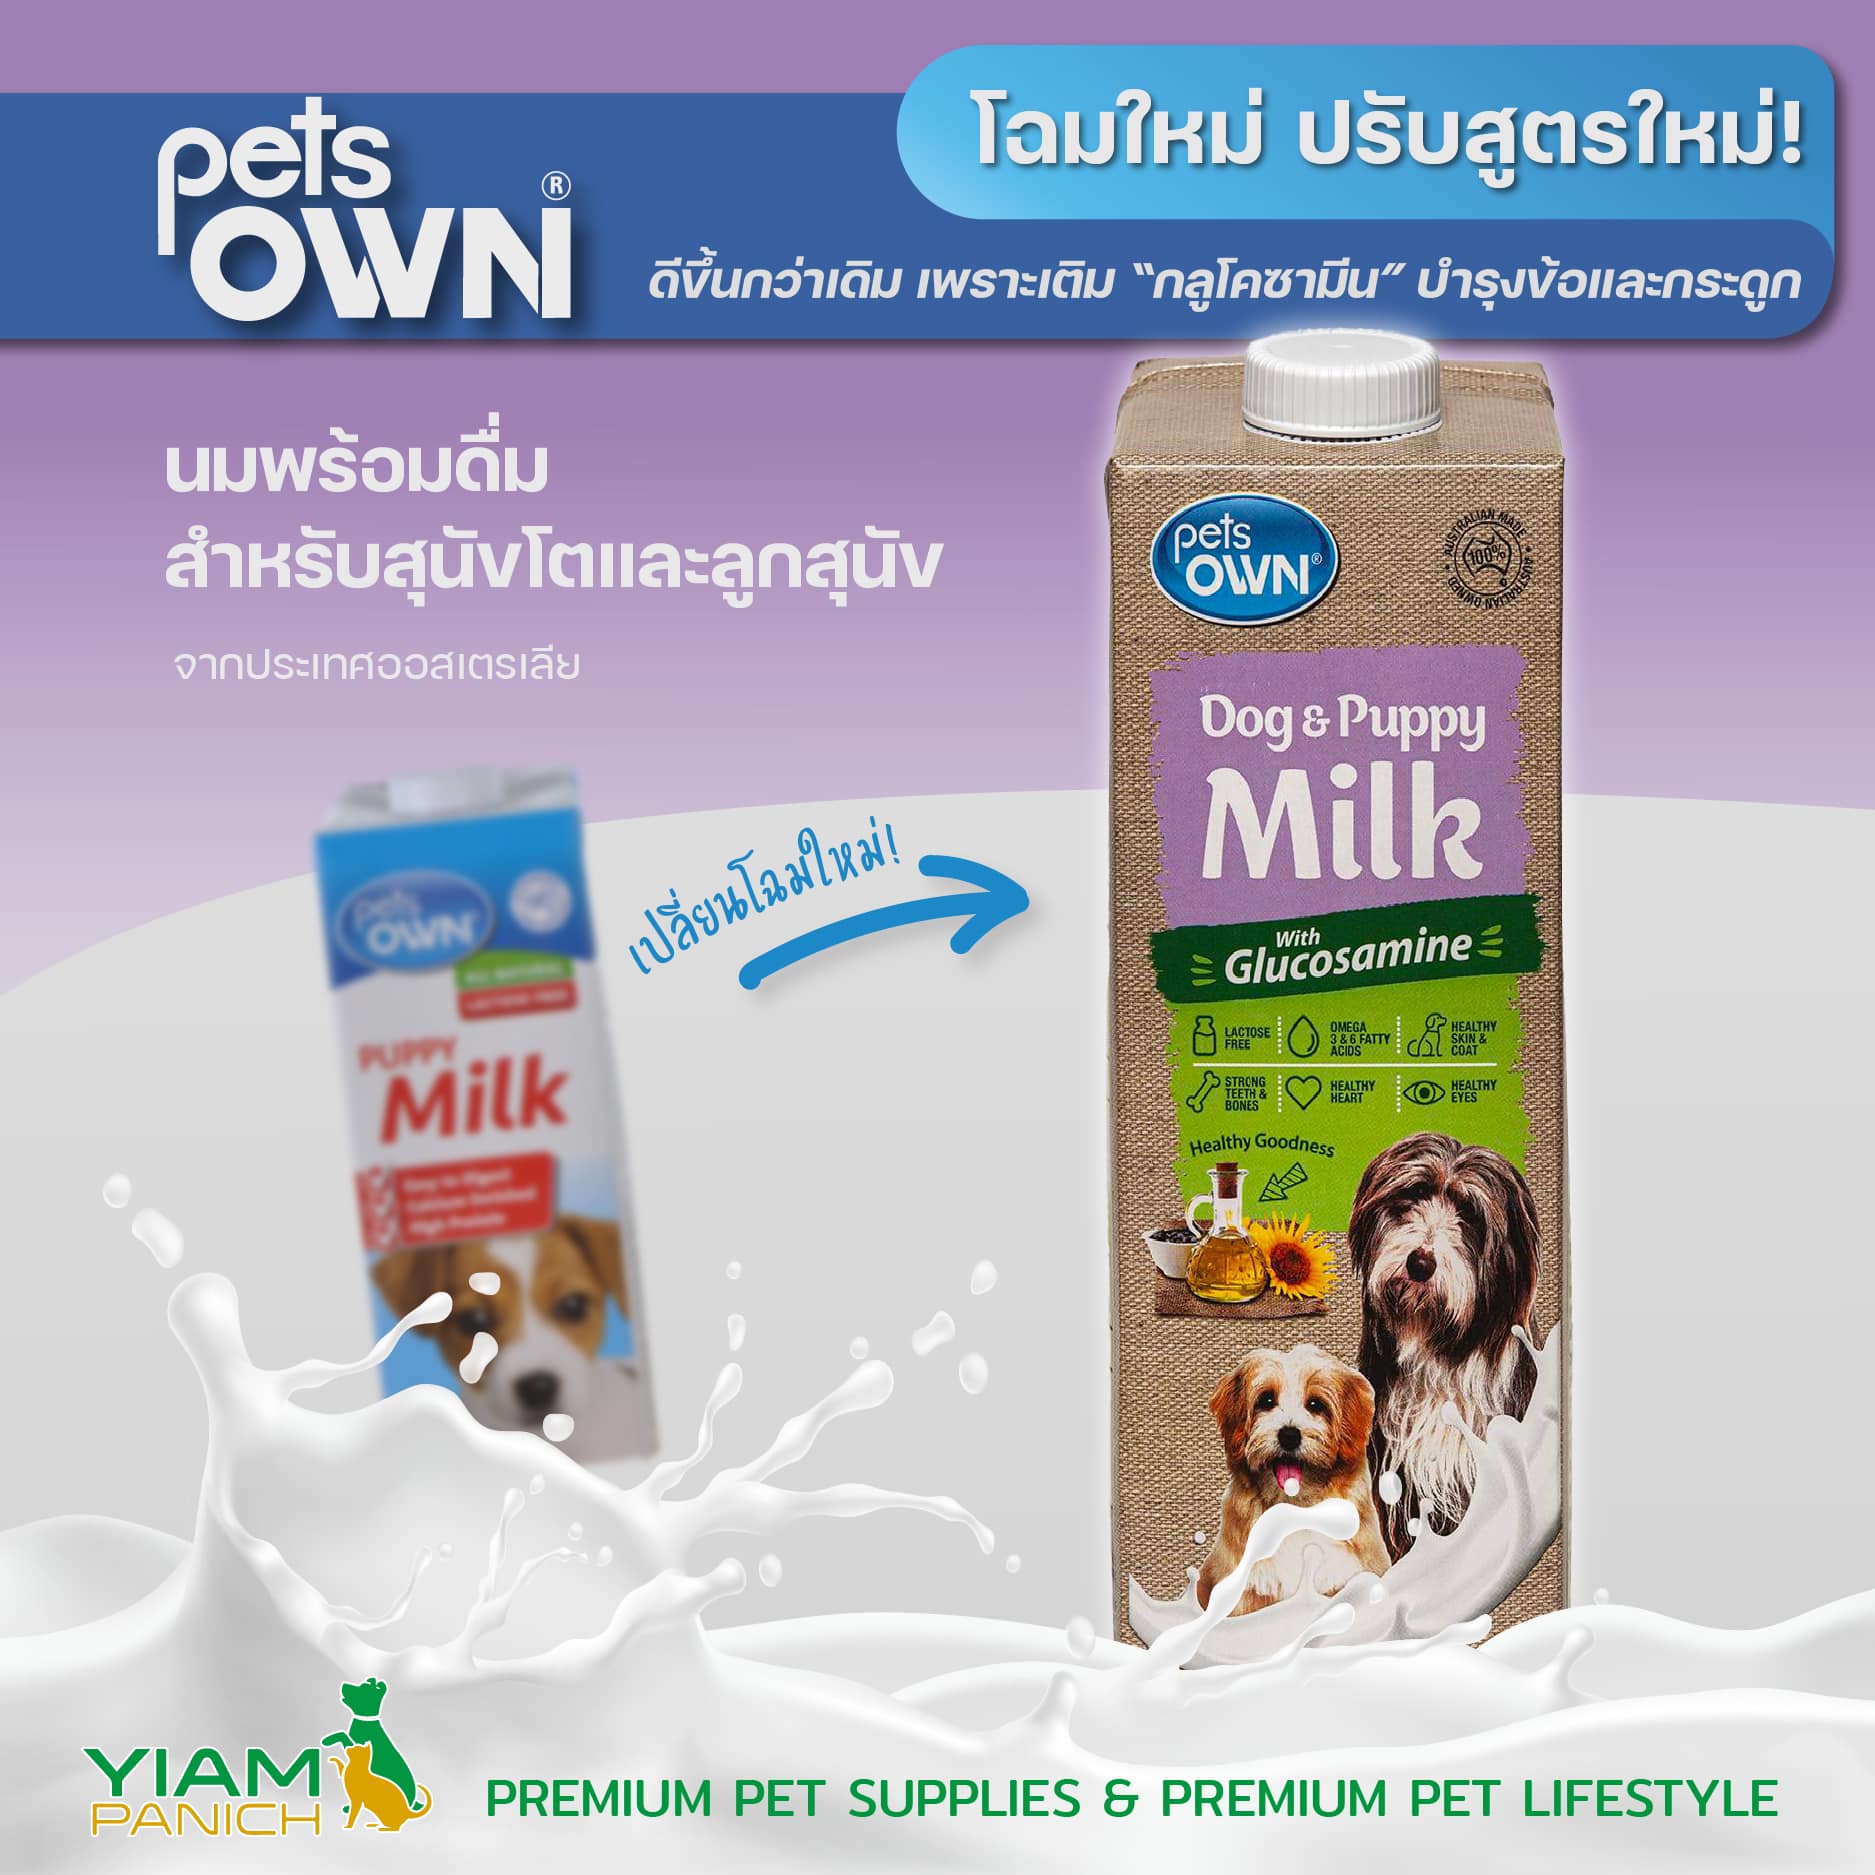 Pets Own - Puppy Milk (2กล่อง,2Box) นมสำหรับลูกสุนัข ขนาด 1ลิตร,1000ML